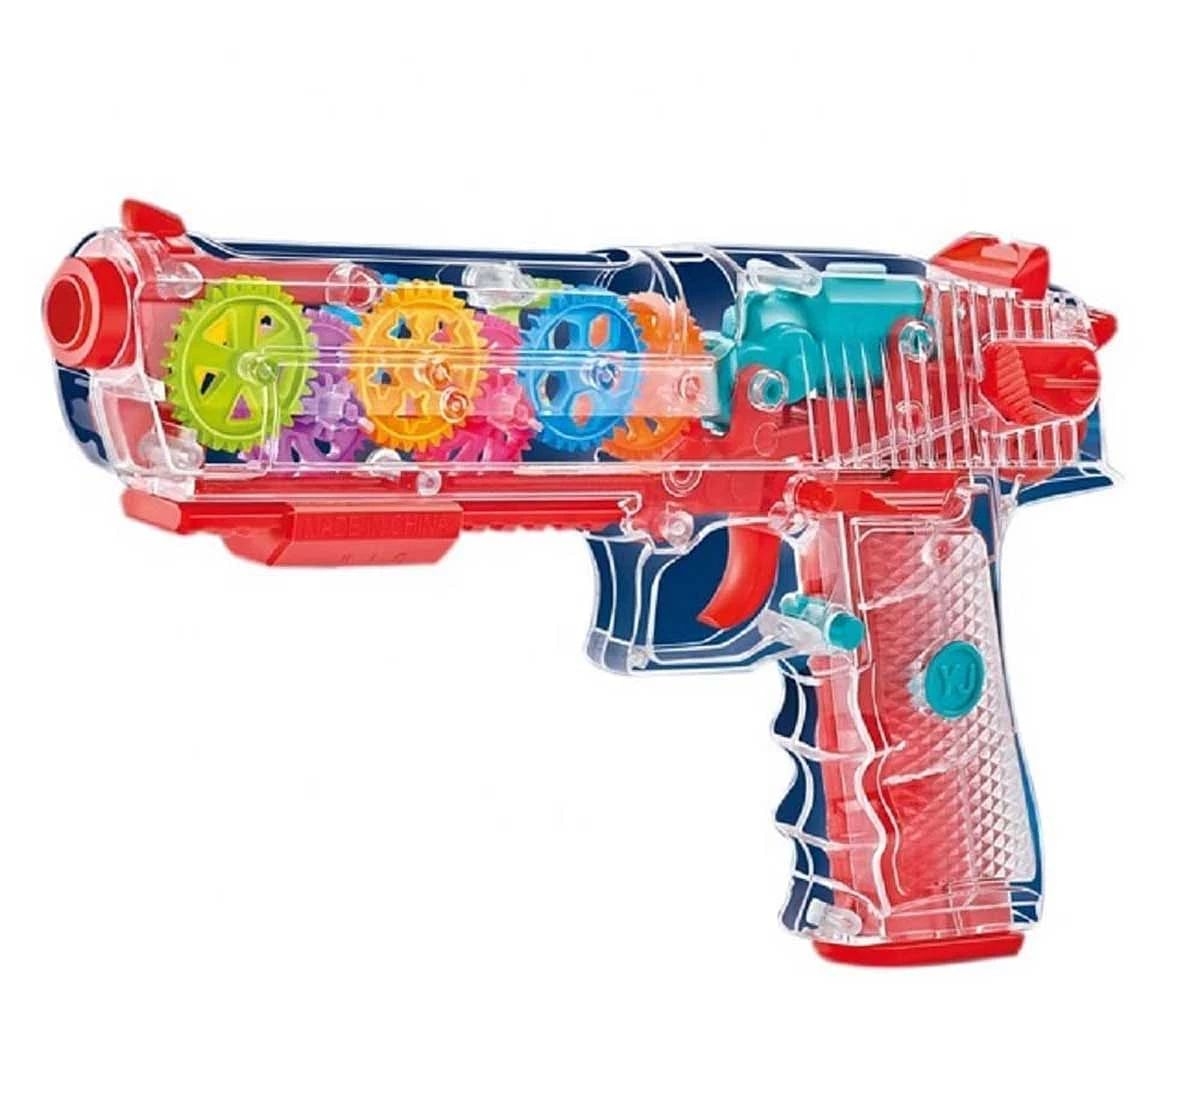 Rowan Gear Musical Gun Light & Sound Toy for Kids 2Y+, Multicolour